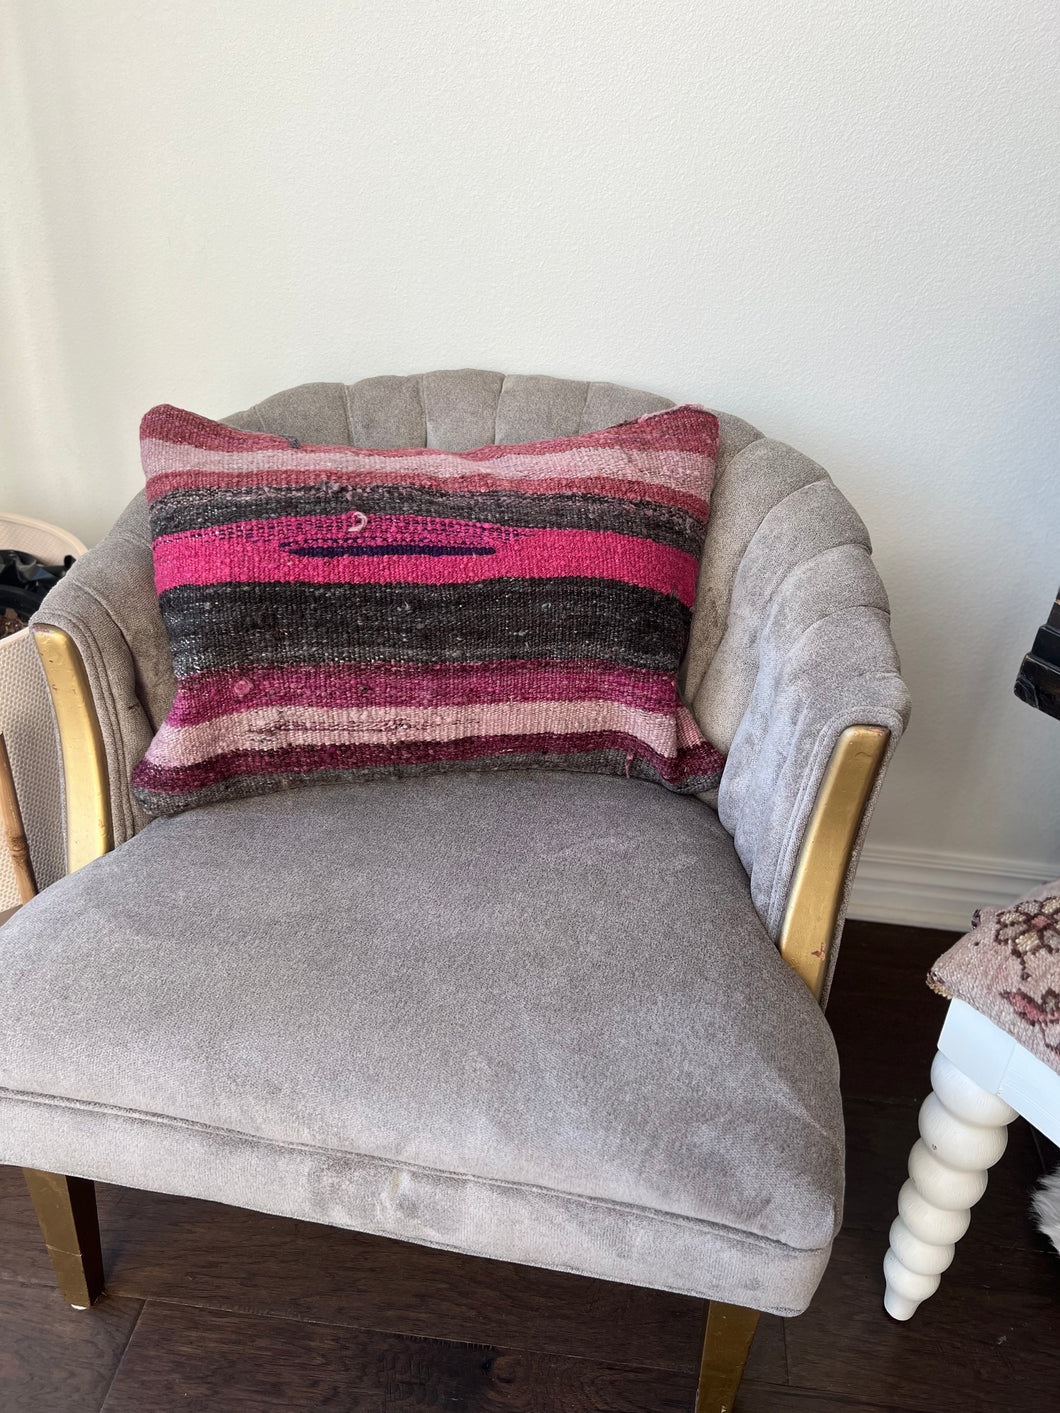 Vintage Pink and Black Kilim Rug Pillow